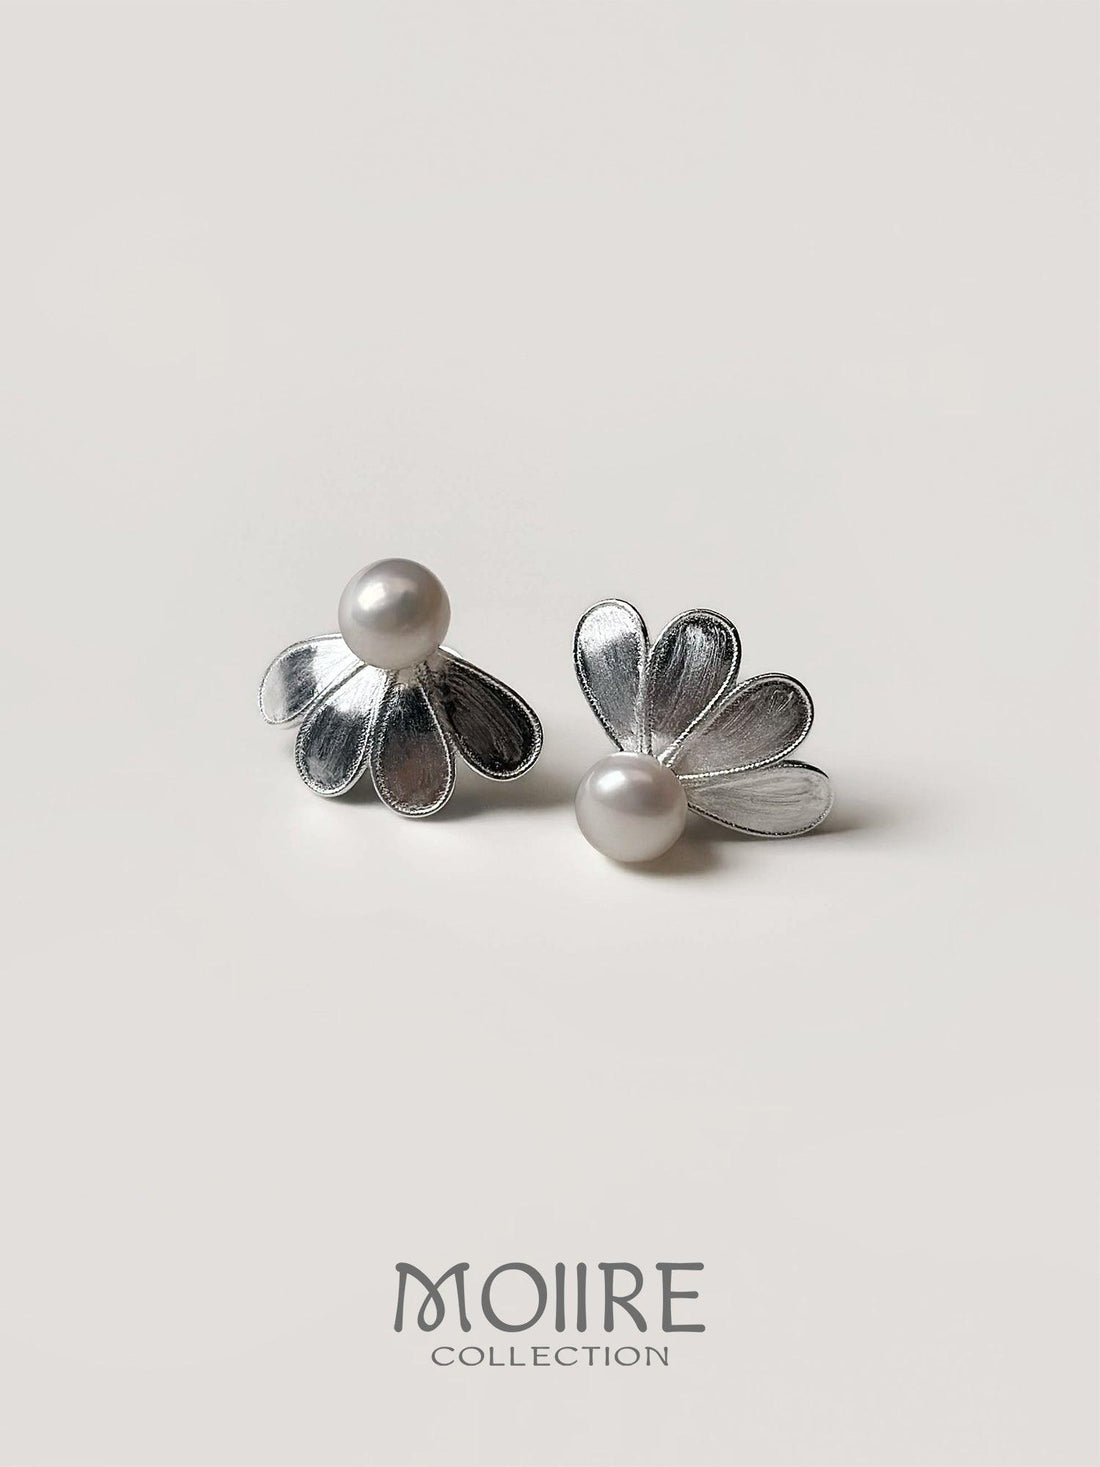 Moiire 自訂 | 花花世界 - Moiire Collection